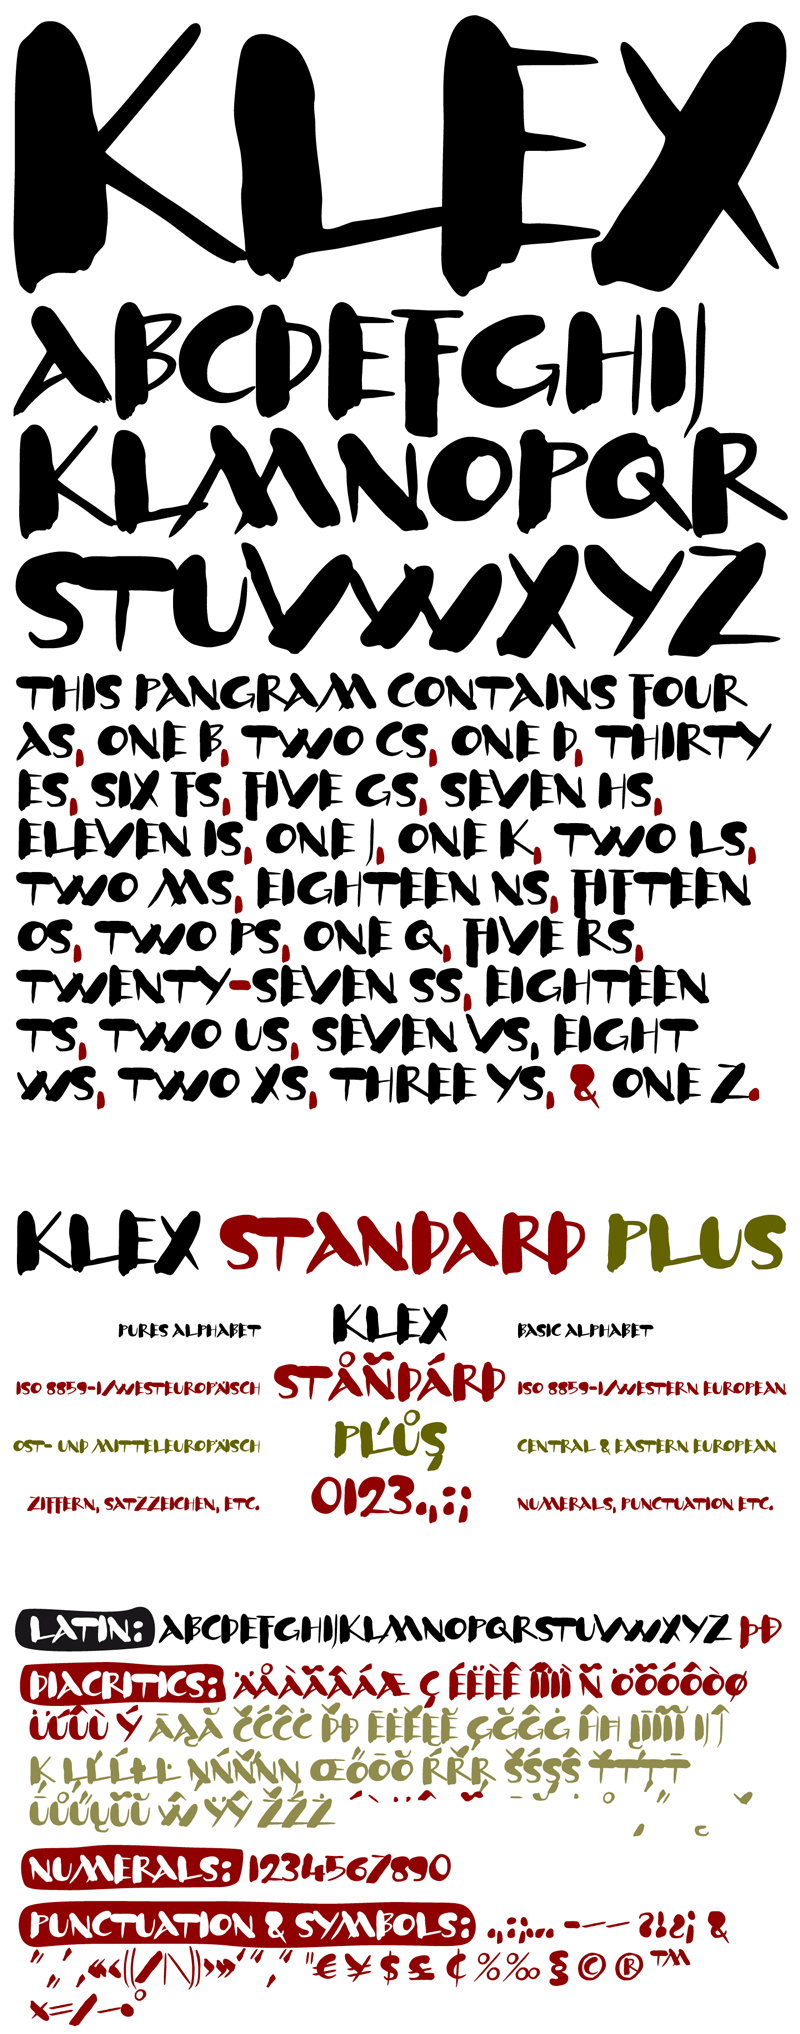 Klex Standard